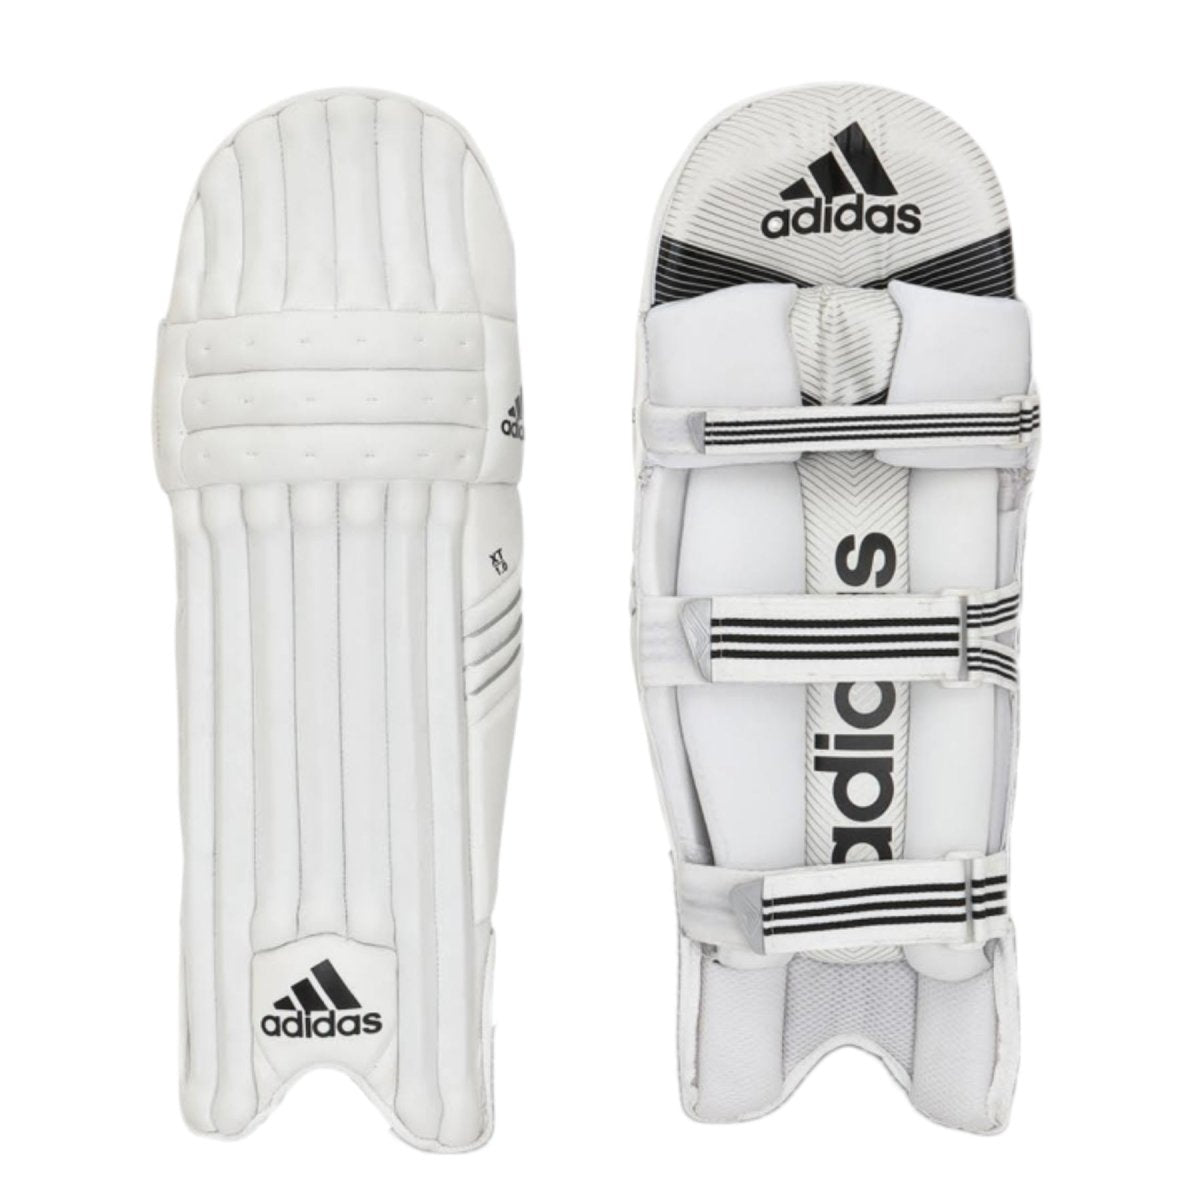 Adidas XT 2.0 Cricket Batting Pads - Acrux Sports